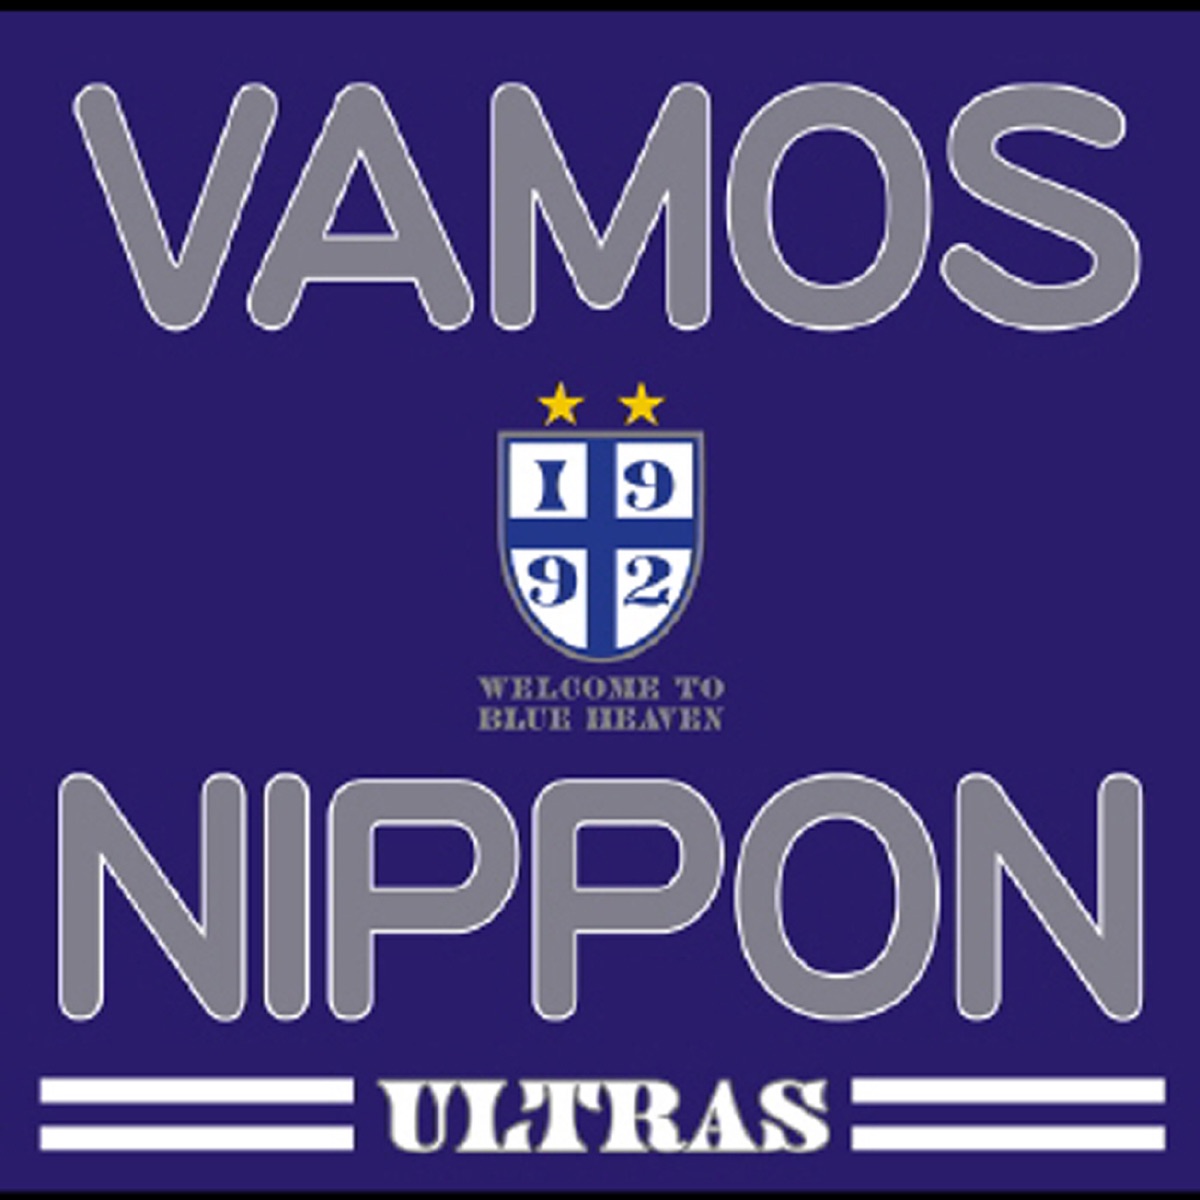 Vamos! Nippon - EP - Album by ULTRAS - Apple Music